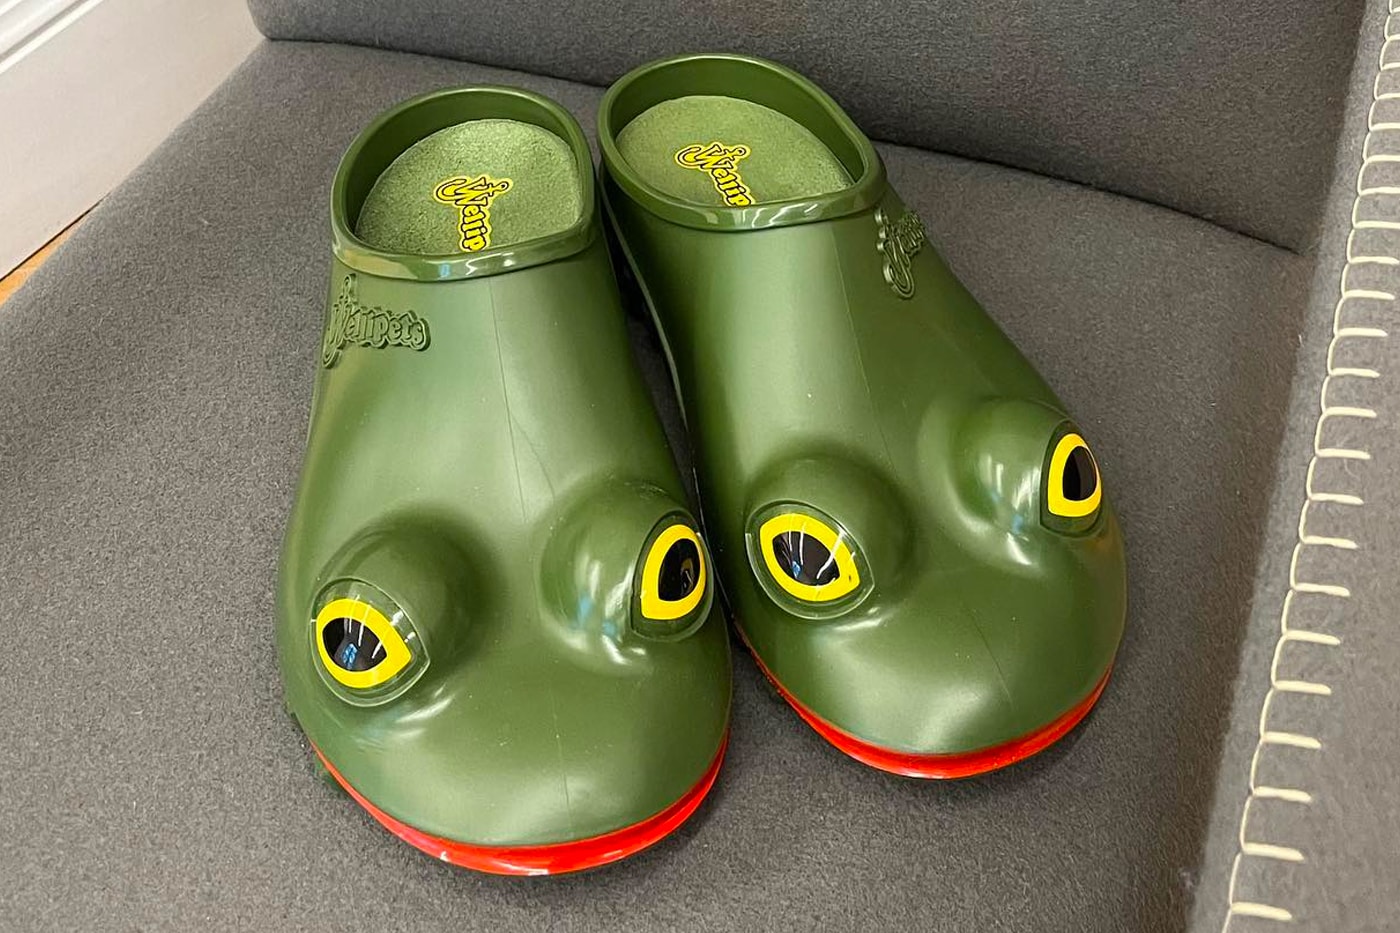 JWアンダーソンから英レインブーツブランド ウェリペッツとのコラボモデルが登場か jonathan jw anderson wellipets frog wellies rain slip on weatherproof shoes green rubber first look info